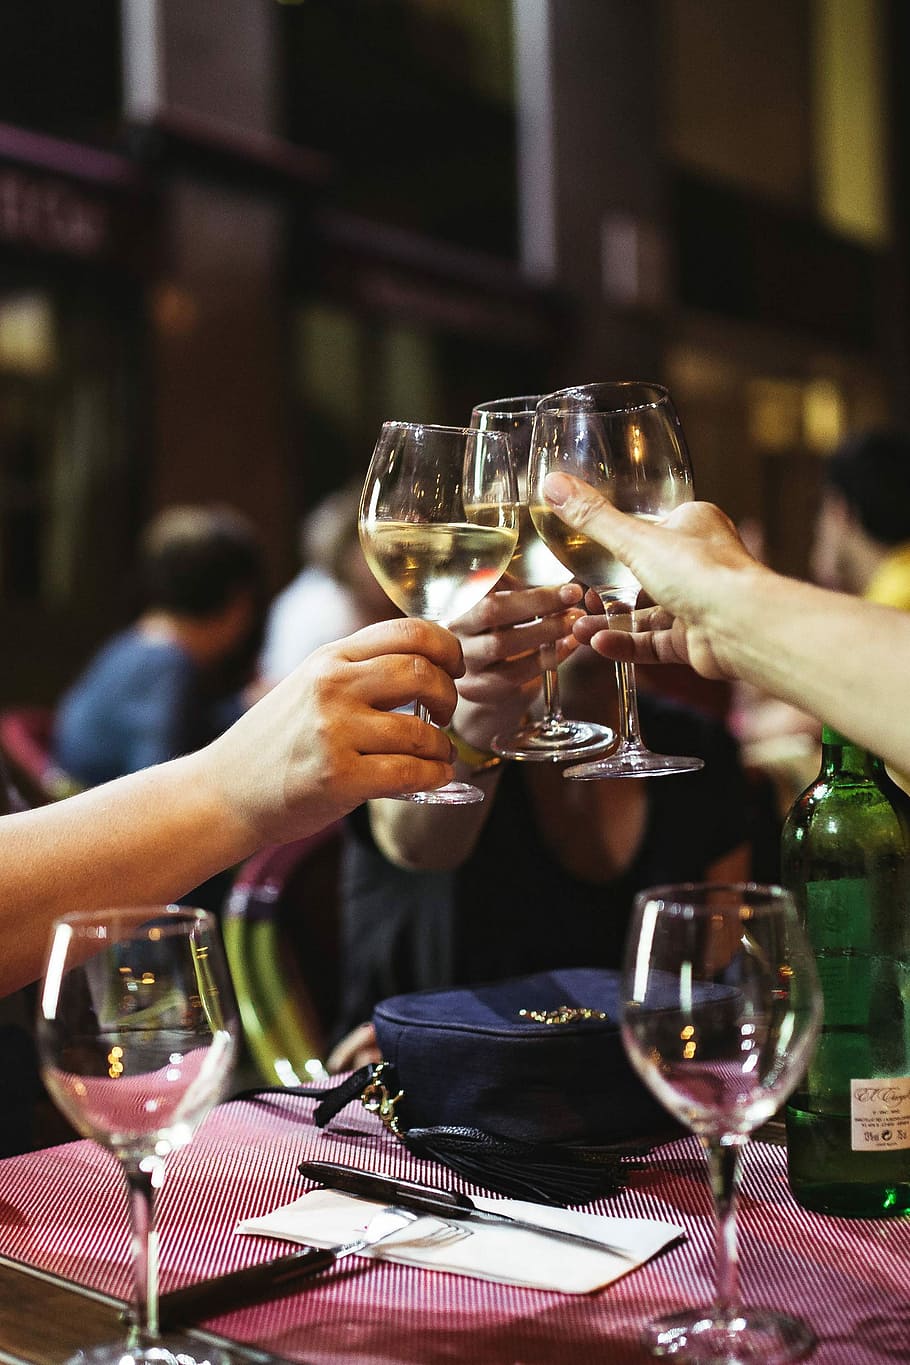 restoran minum anggur, Teman, restoran, minum, anggur, malam, kesenangan, bahagia, wanita, makan malam